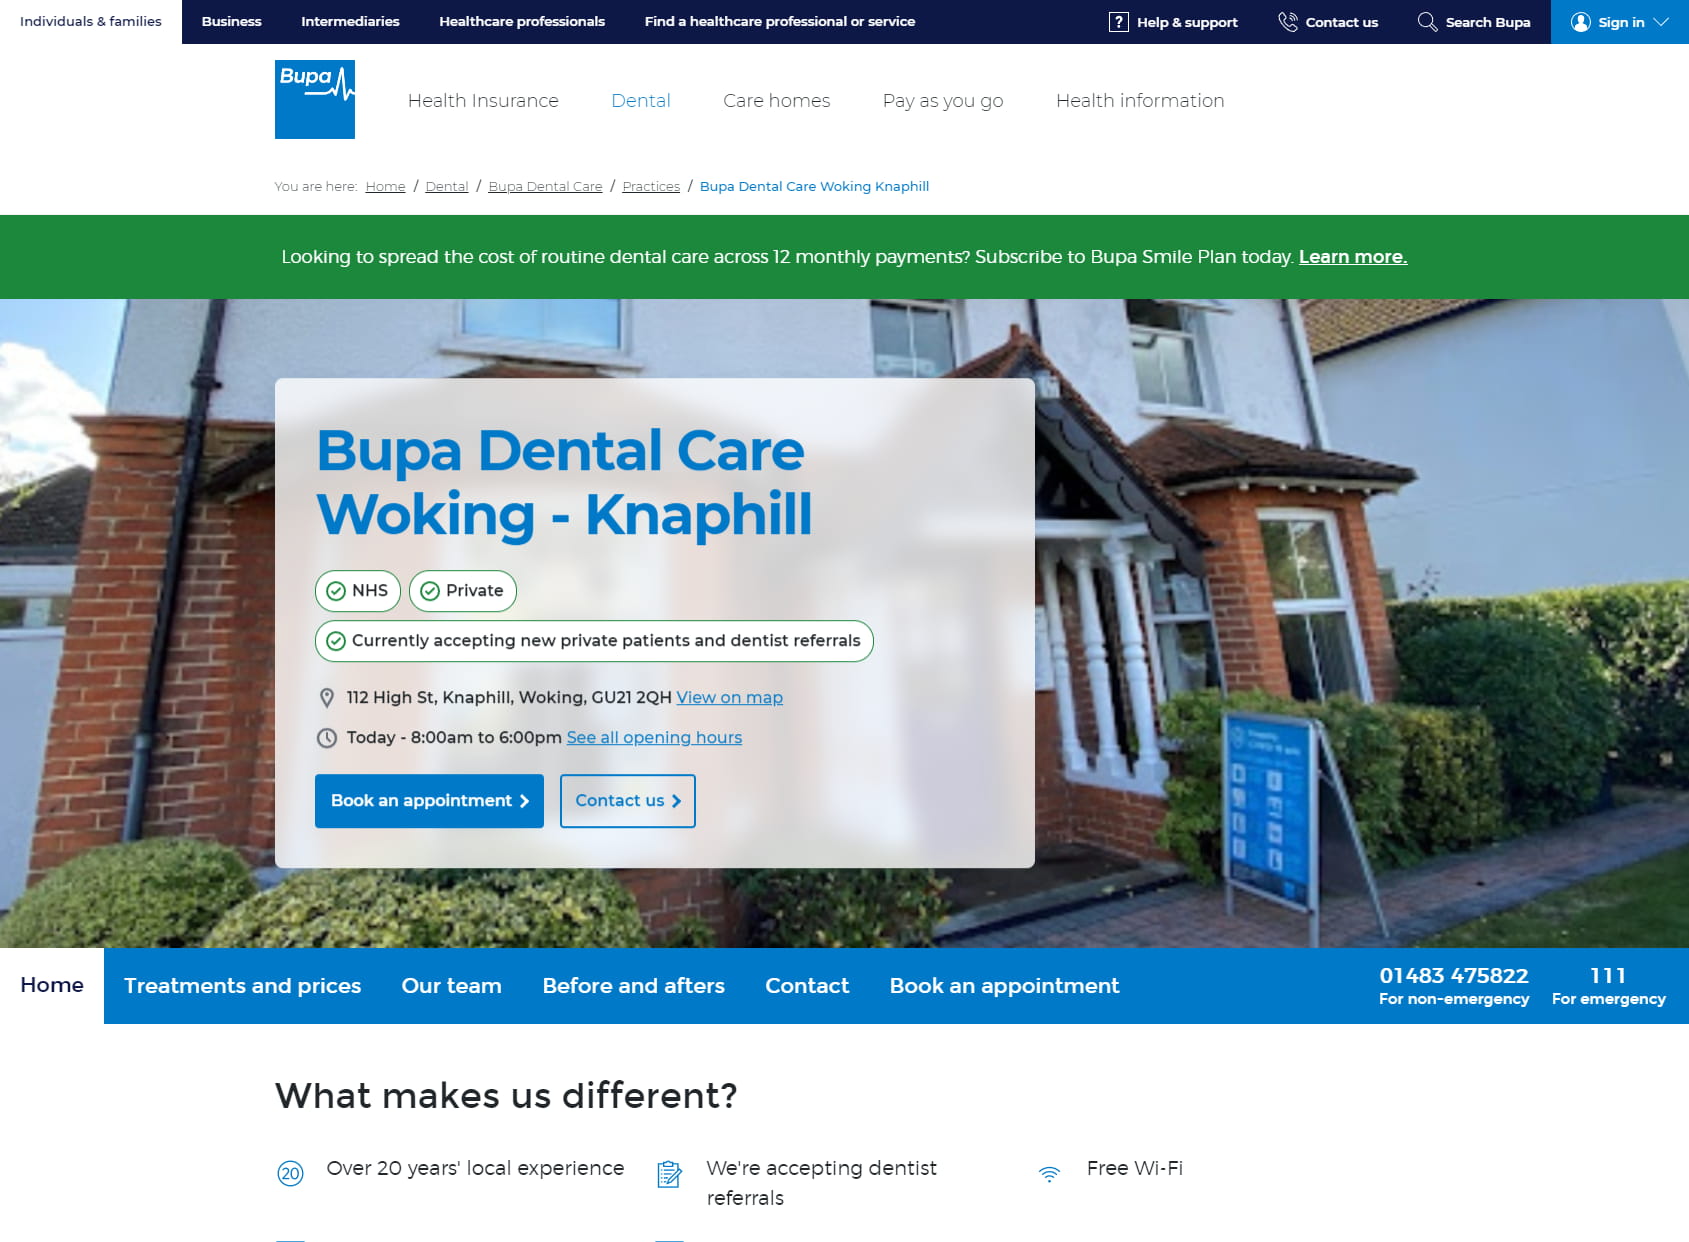 Bupa Dental Care Woking - Knaphill